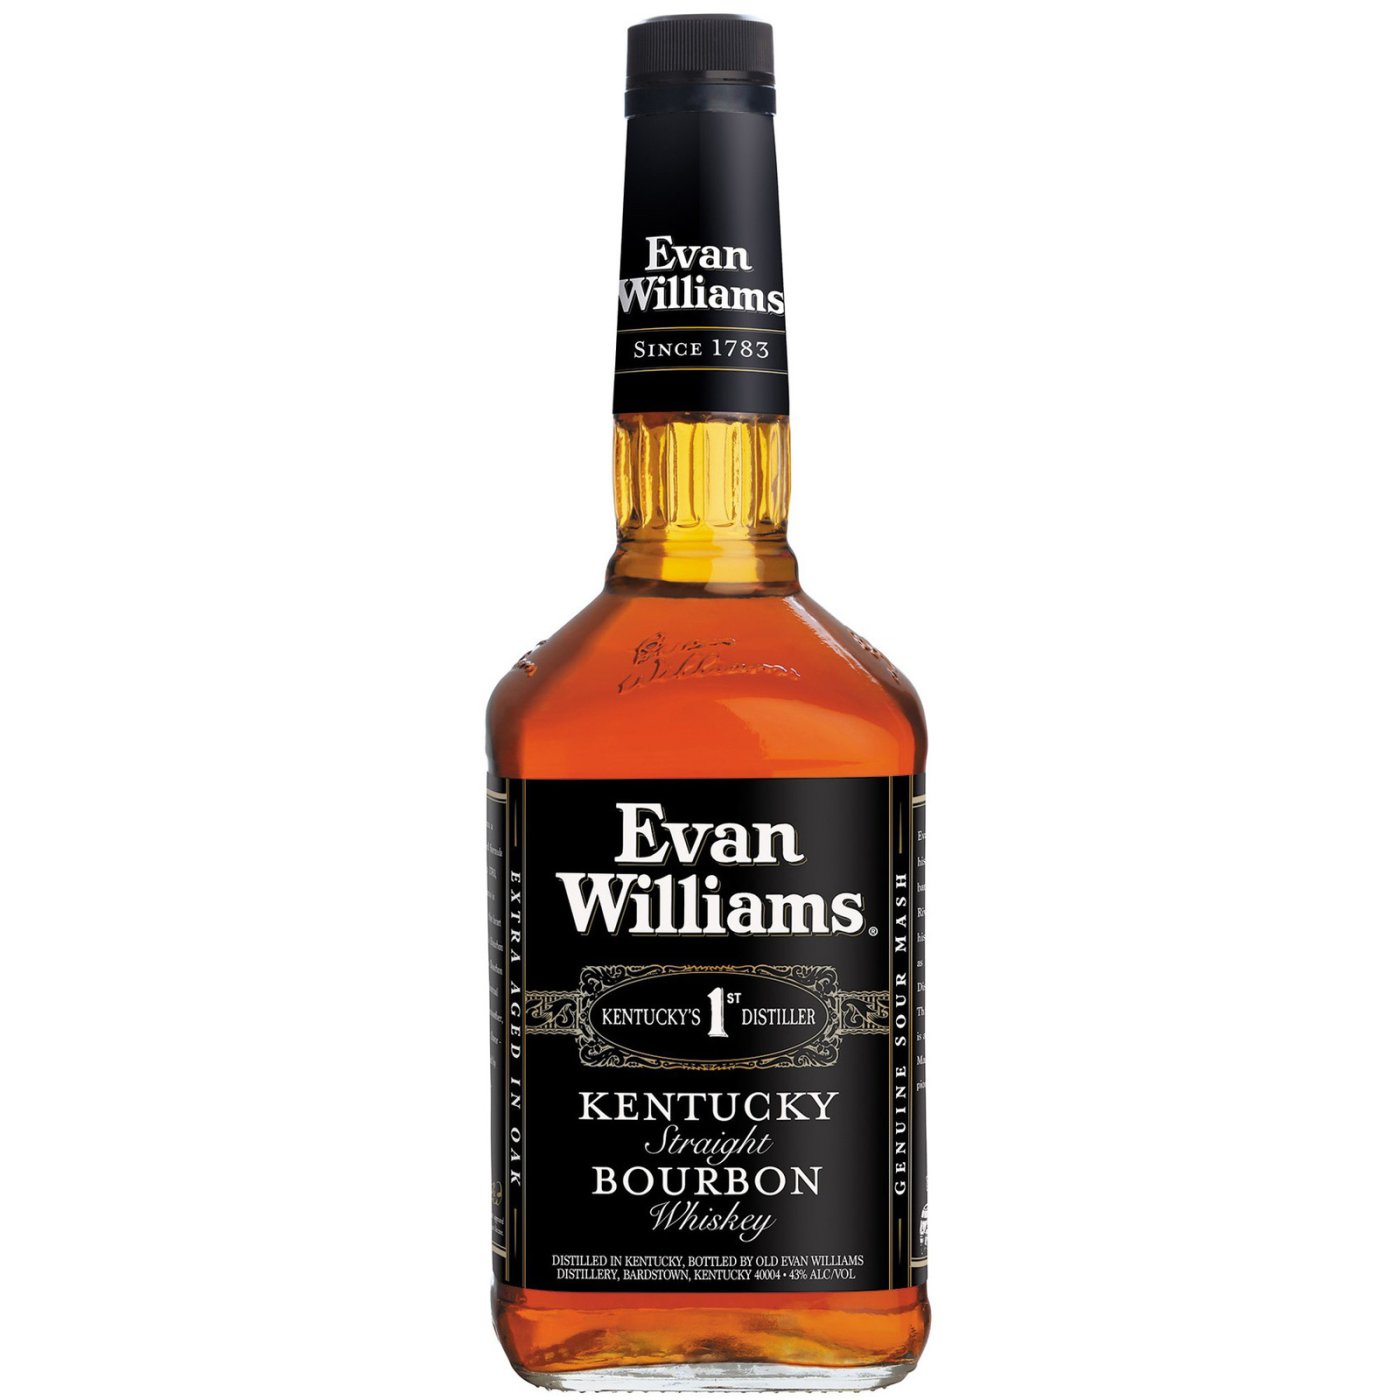 Evan Williams - Kentucky Straight Bourbon 1 liter